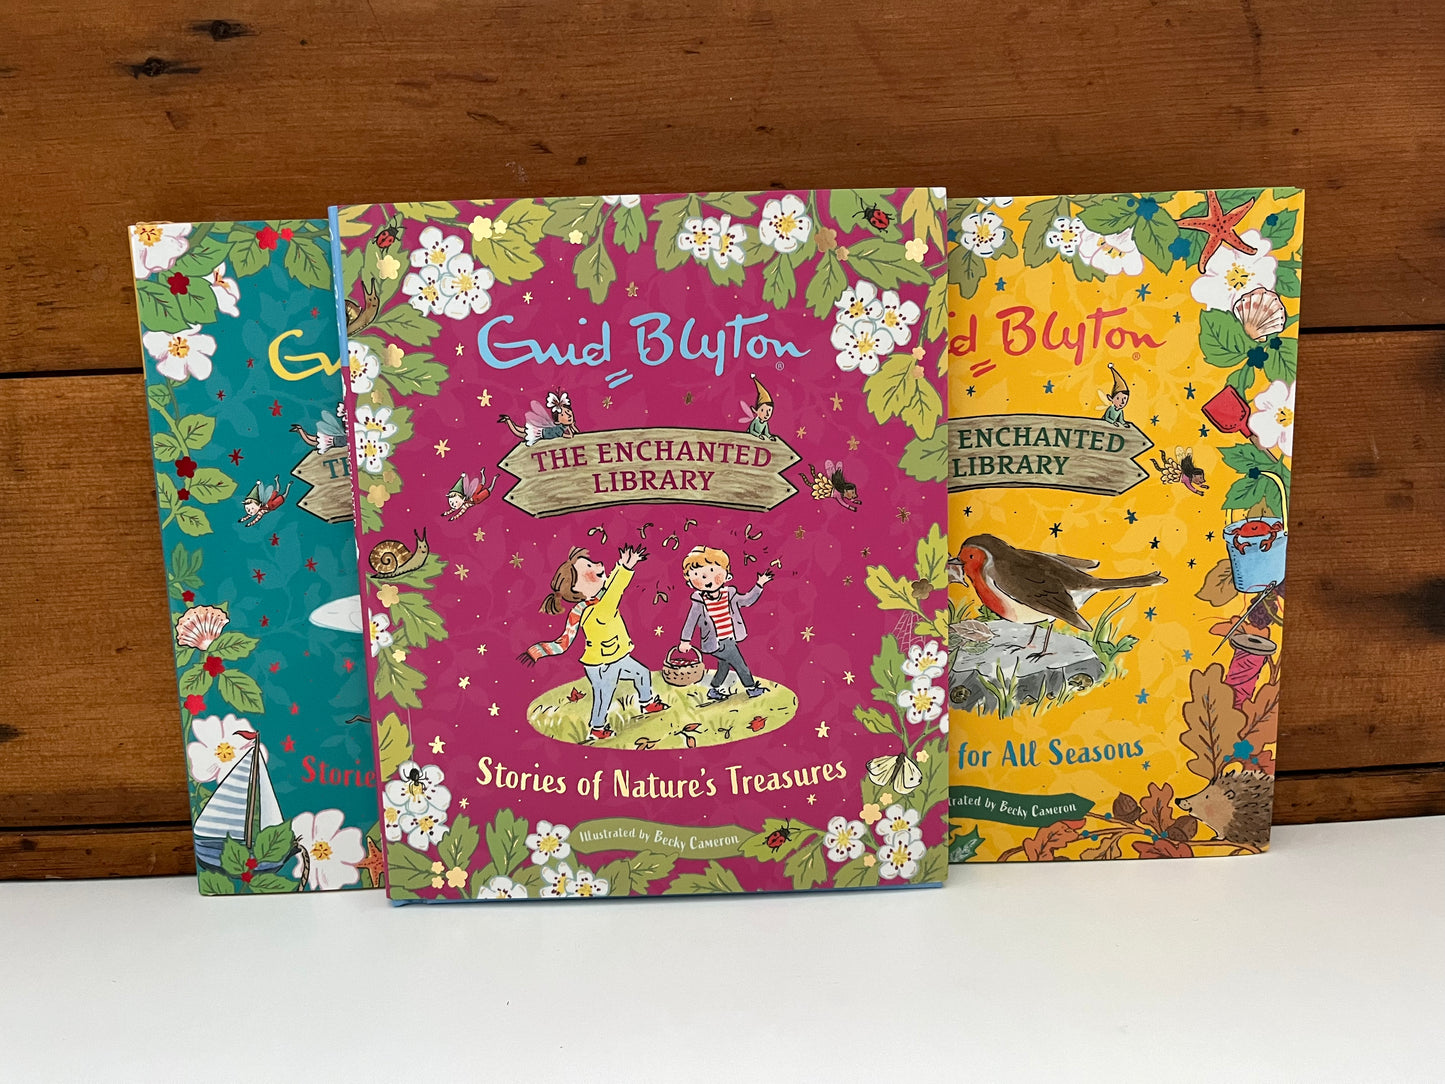 Children’s Picture Book - Enid Blyton’s STORIES FOR ALL SEASONS